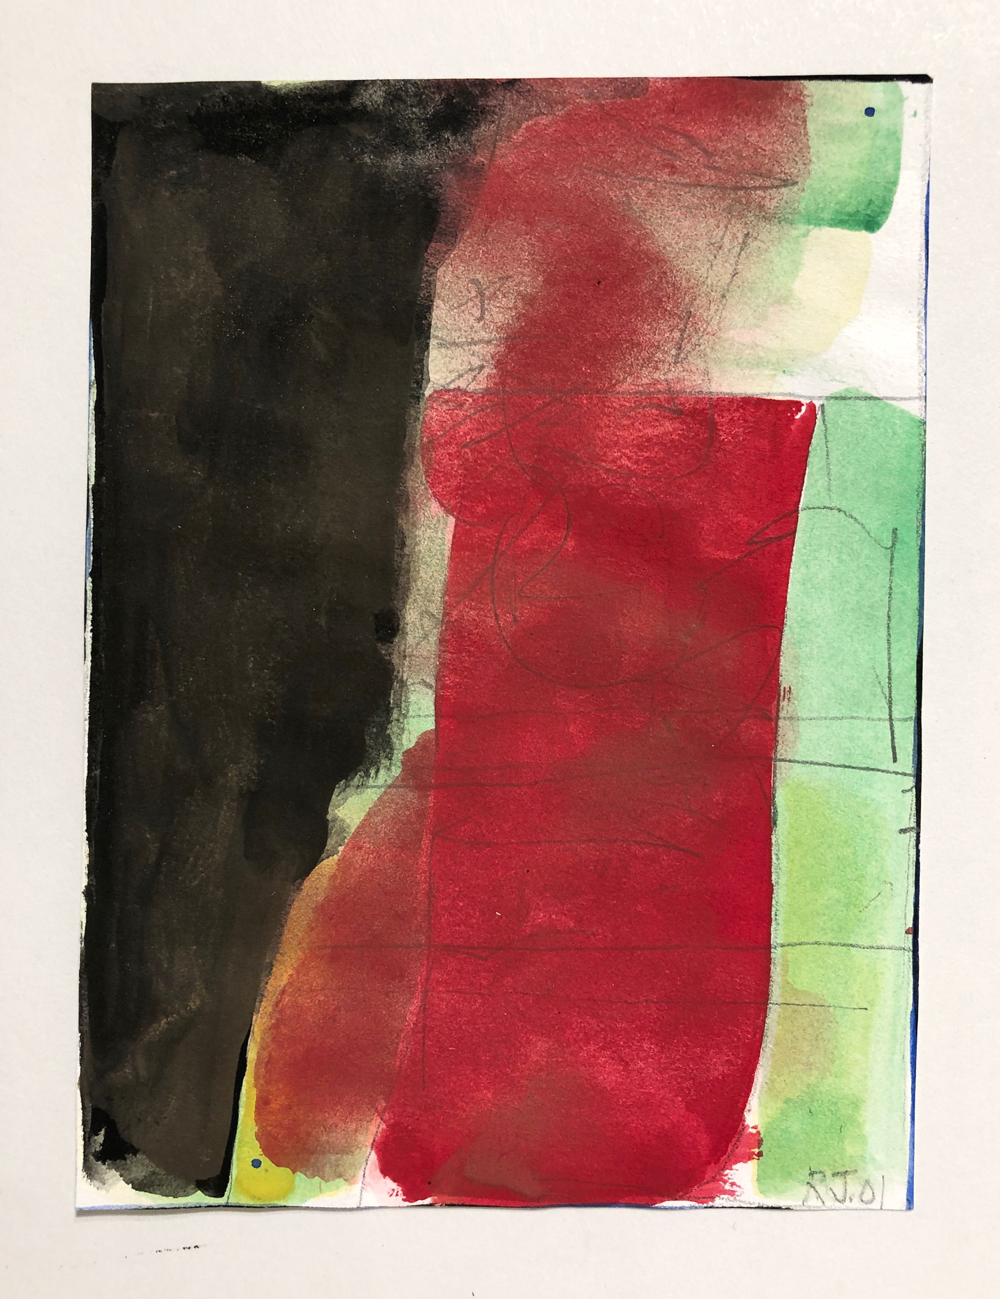 Robert C. Jones, Untitled, 2001, graphite and watercolor on paper, $1000.